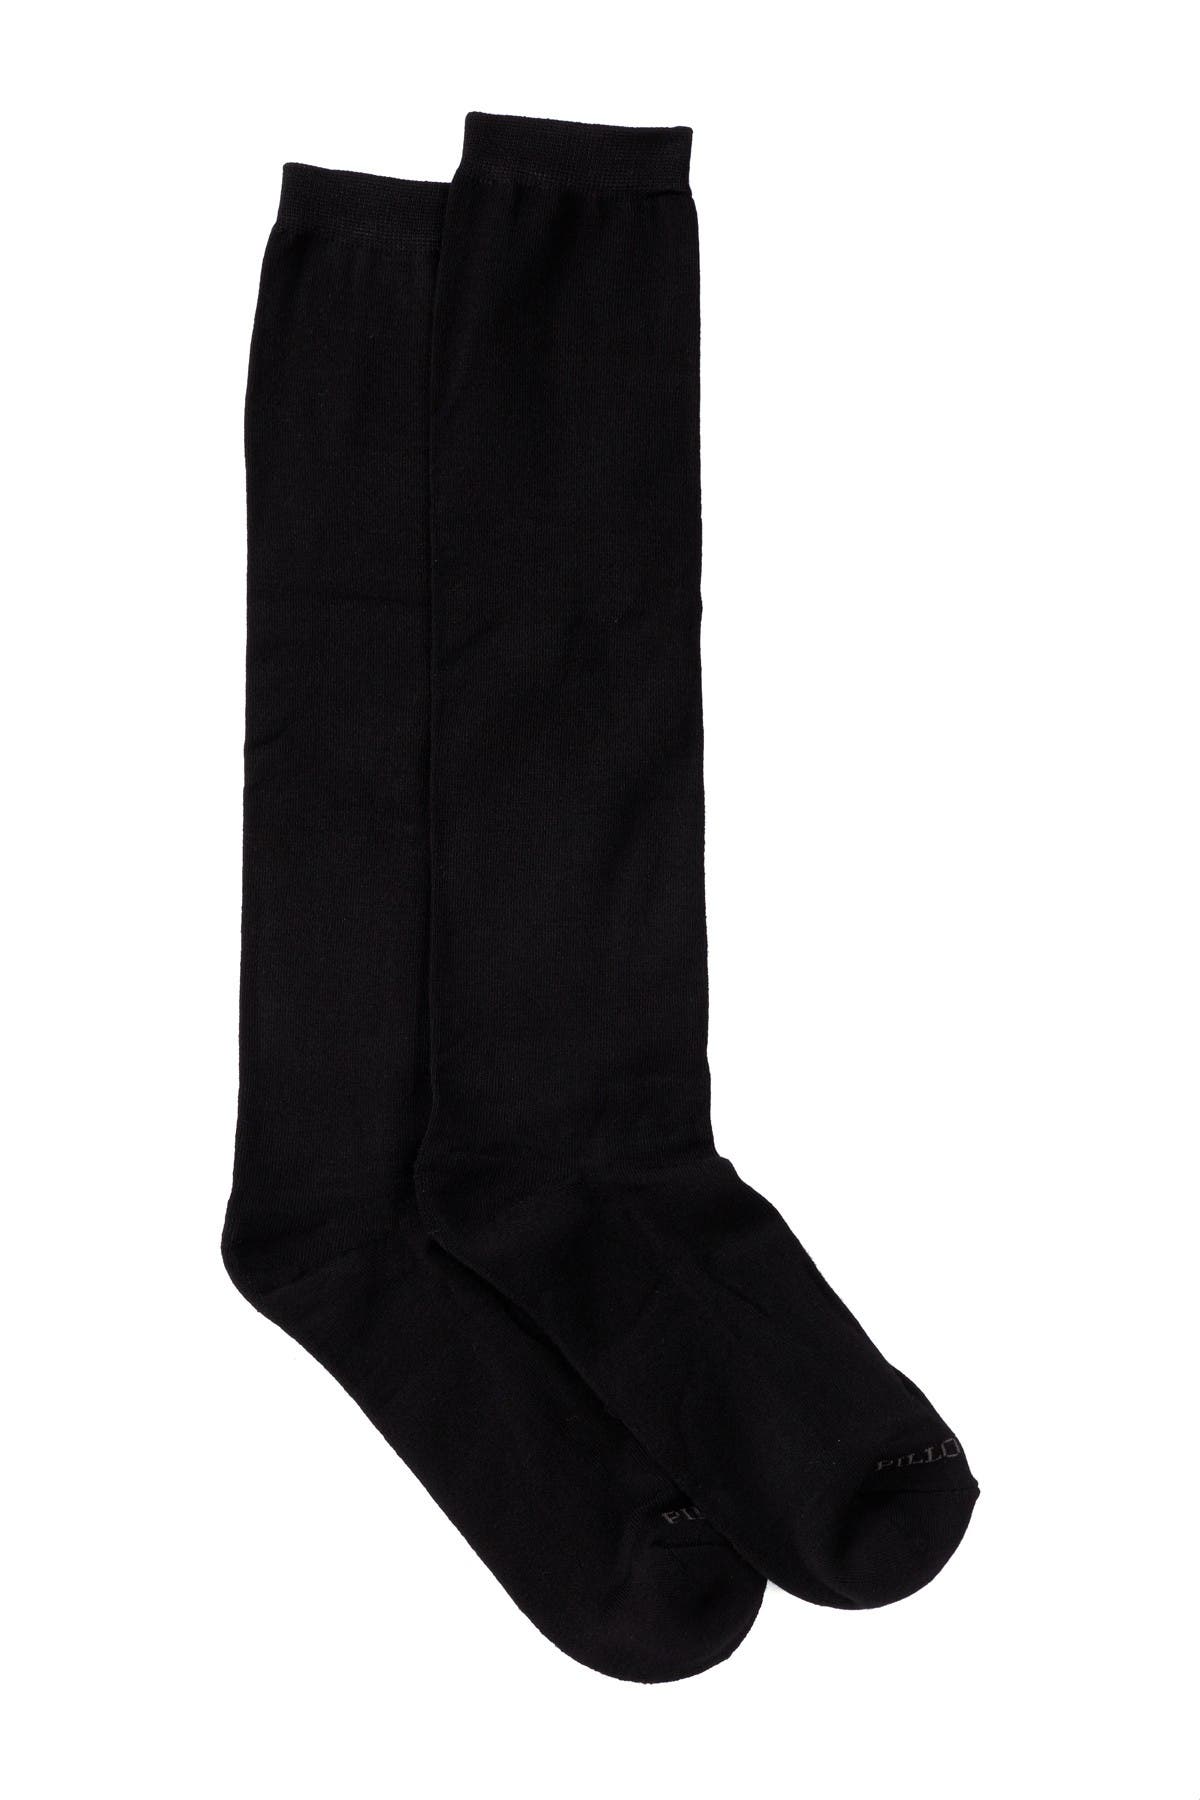 shimera | Pillow Sole Knee High Socks - Pack of 2 | Nordstrom Rack